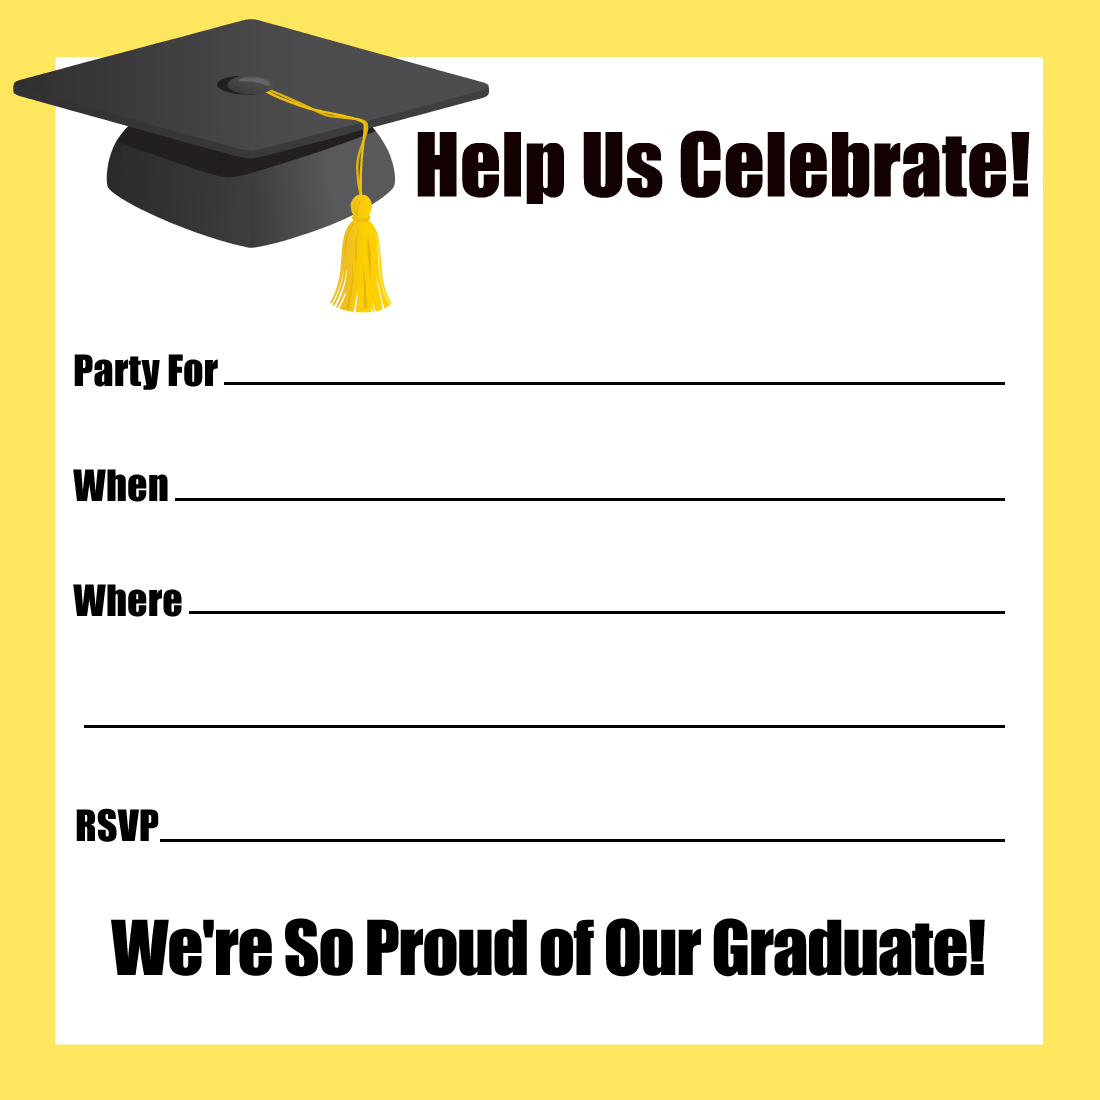 Printable Graduation Party Invitations